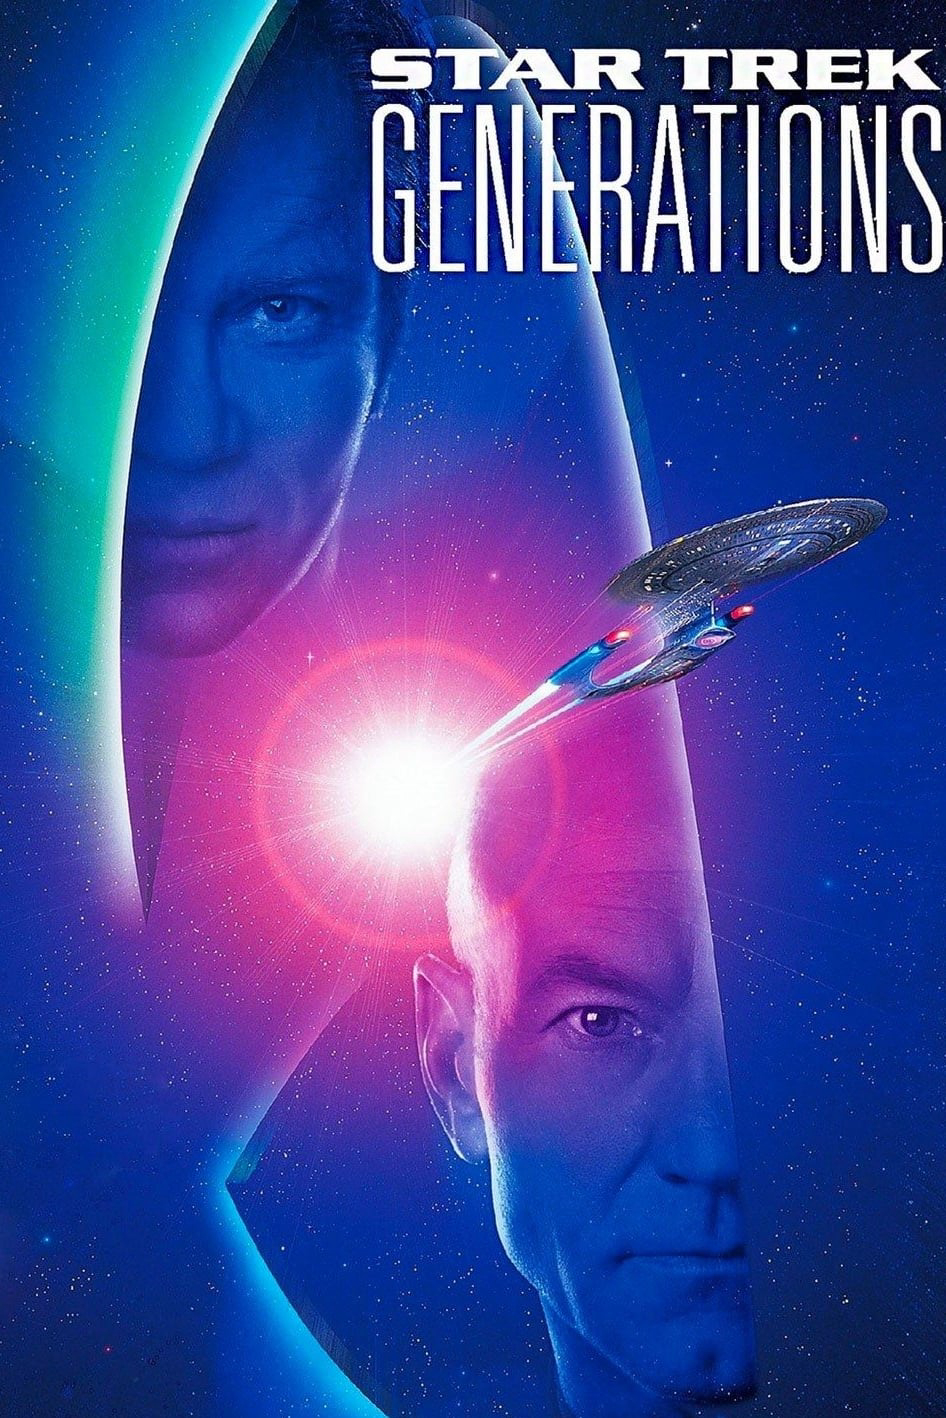 Poster Phim Star Trek: Các Thế Hệ (Star Trek Generations)